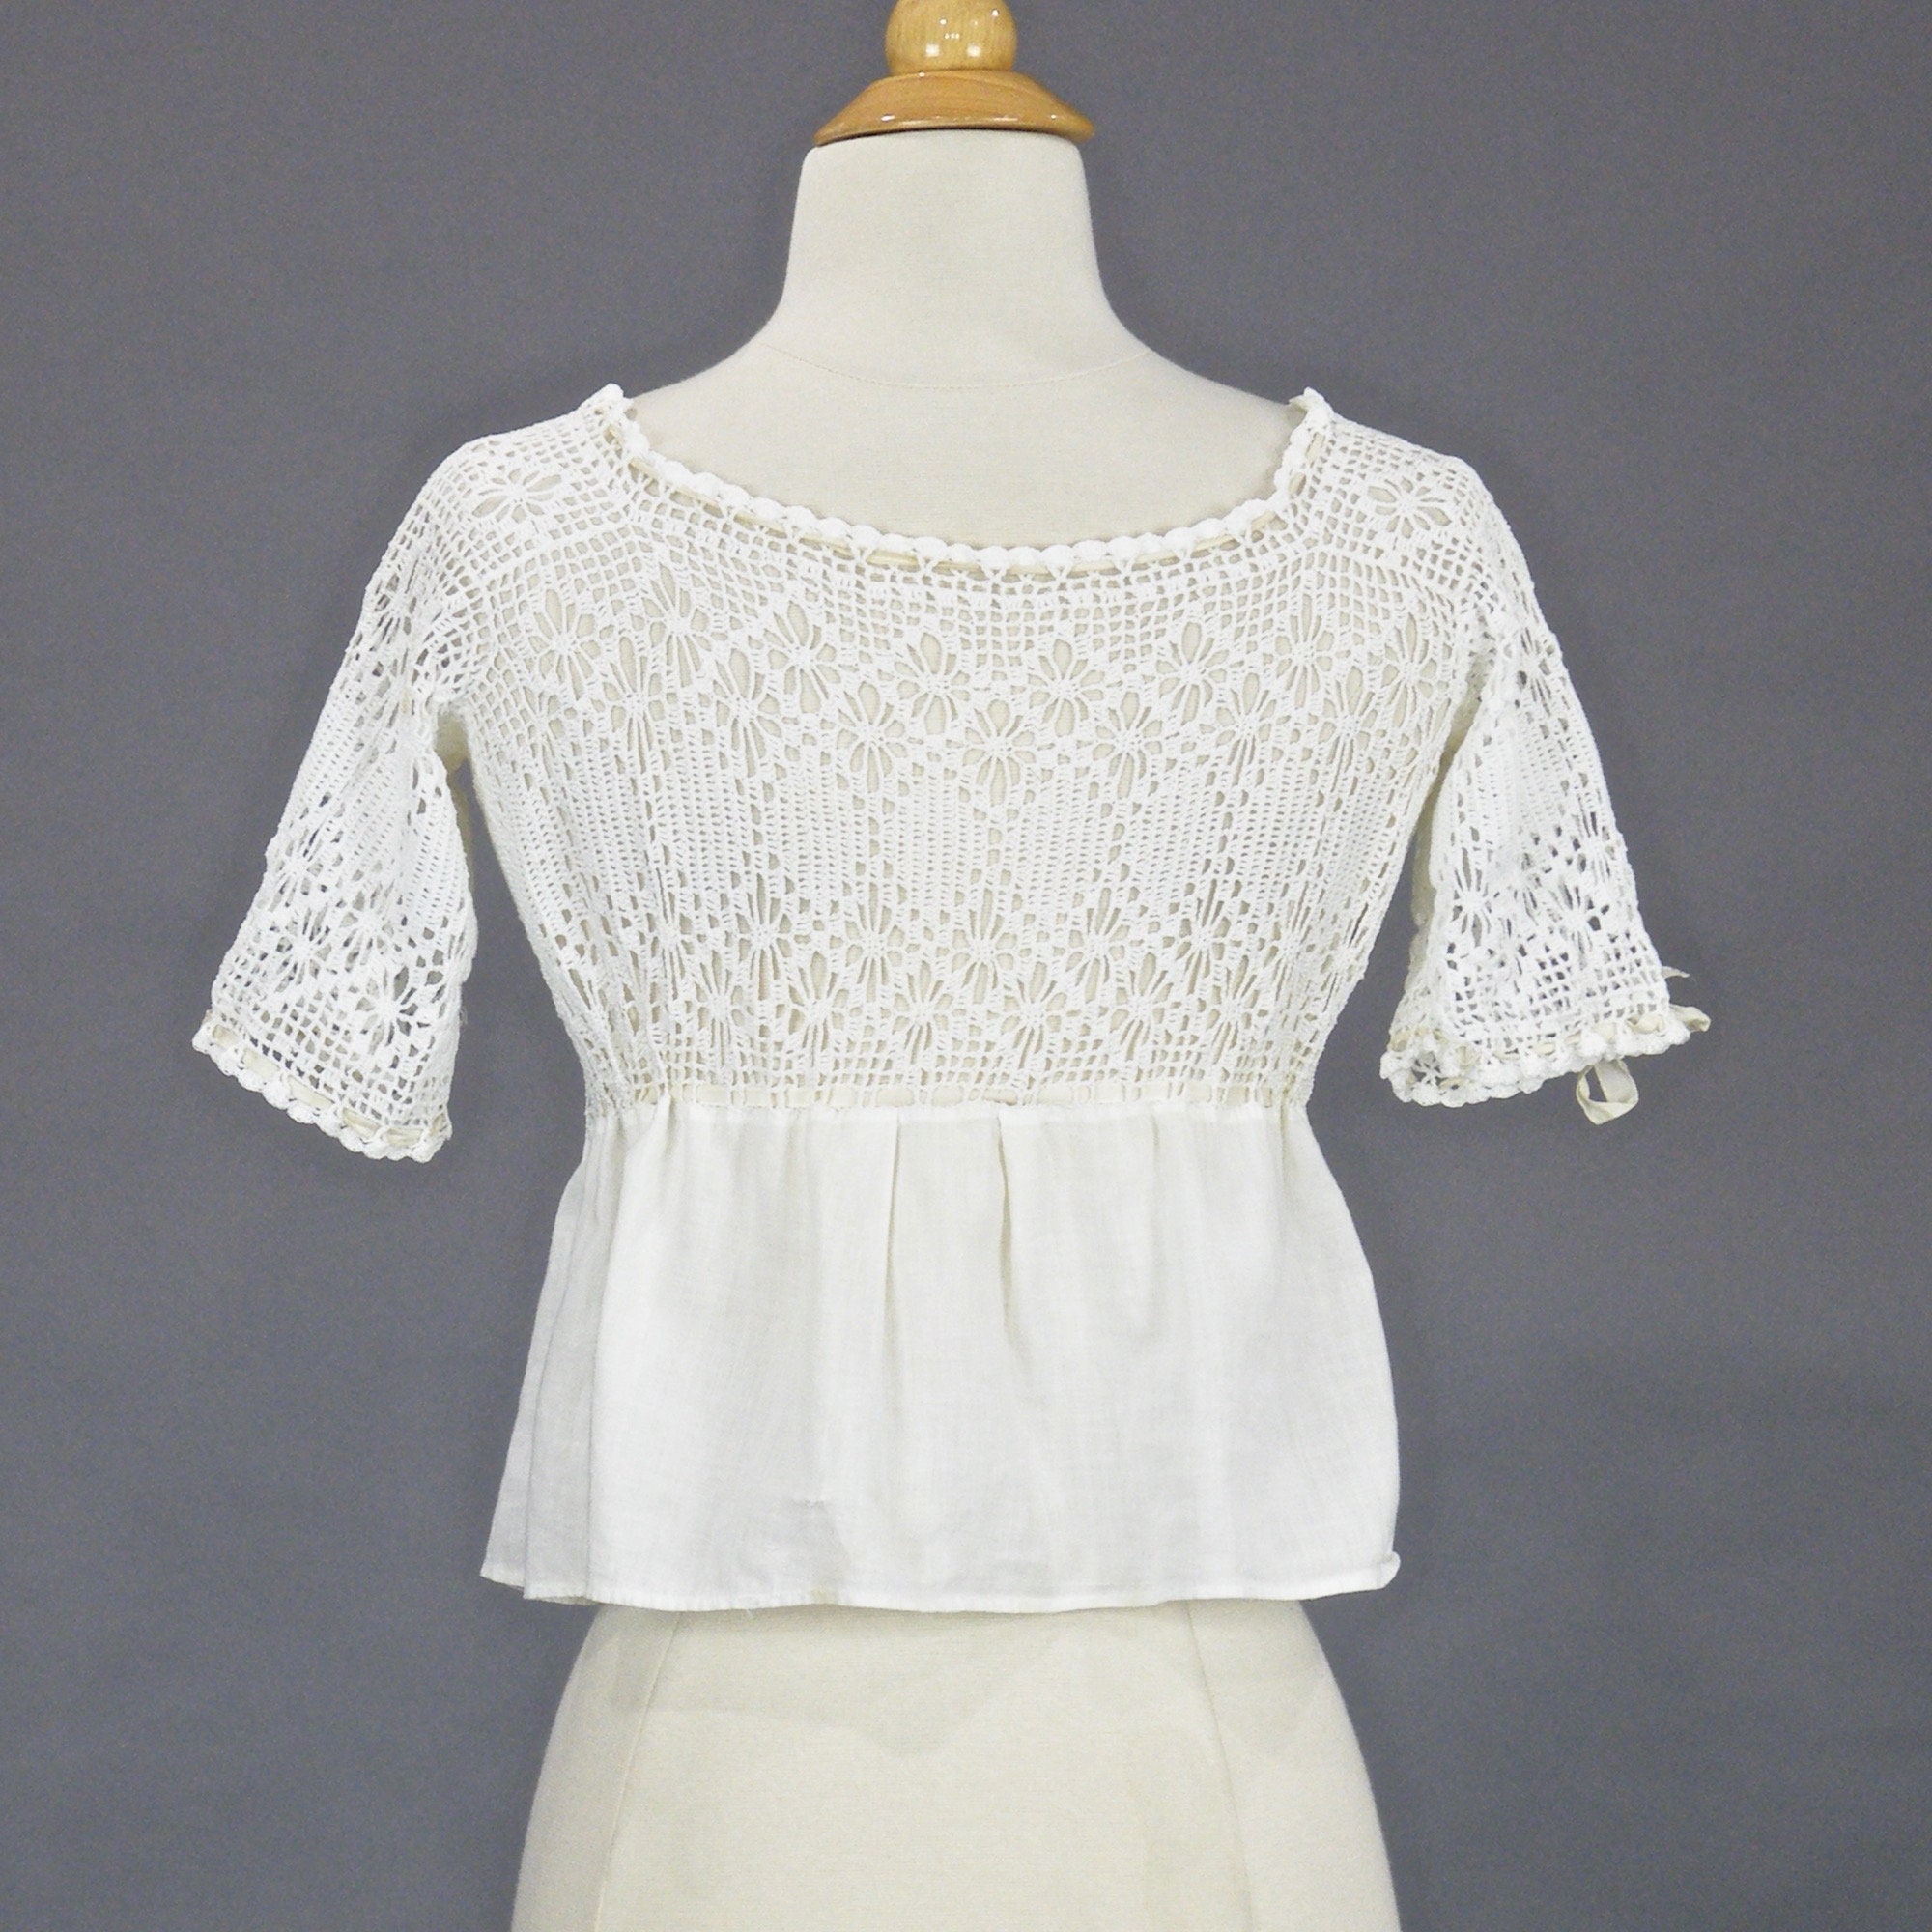 Antique White Cotton Crochet Camisole 1910s 1920s Cami Top | Etsy